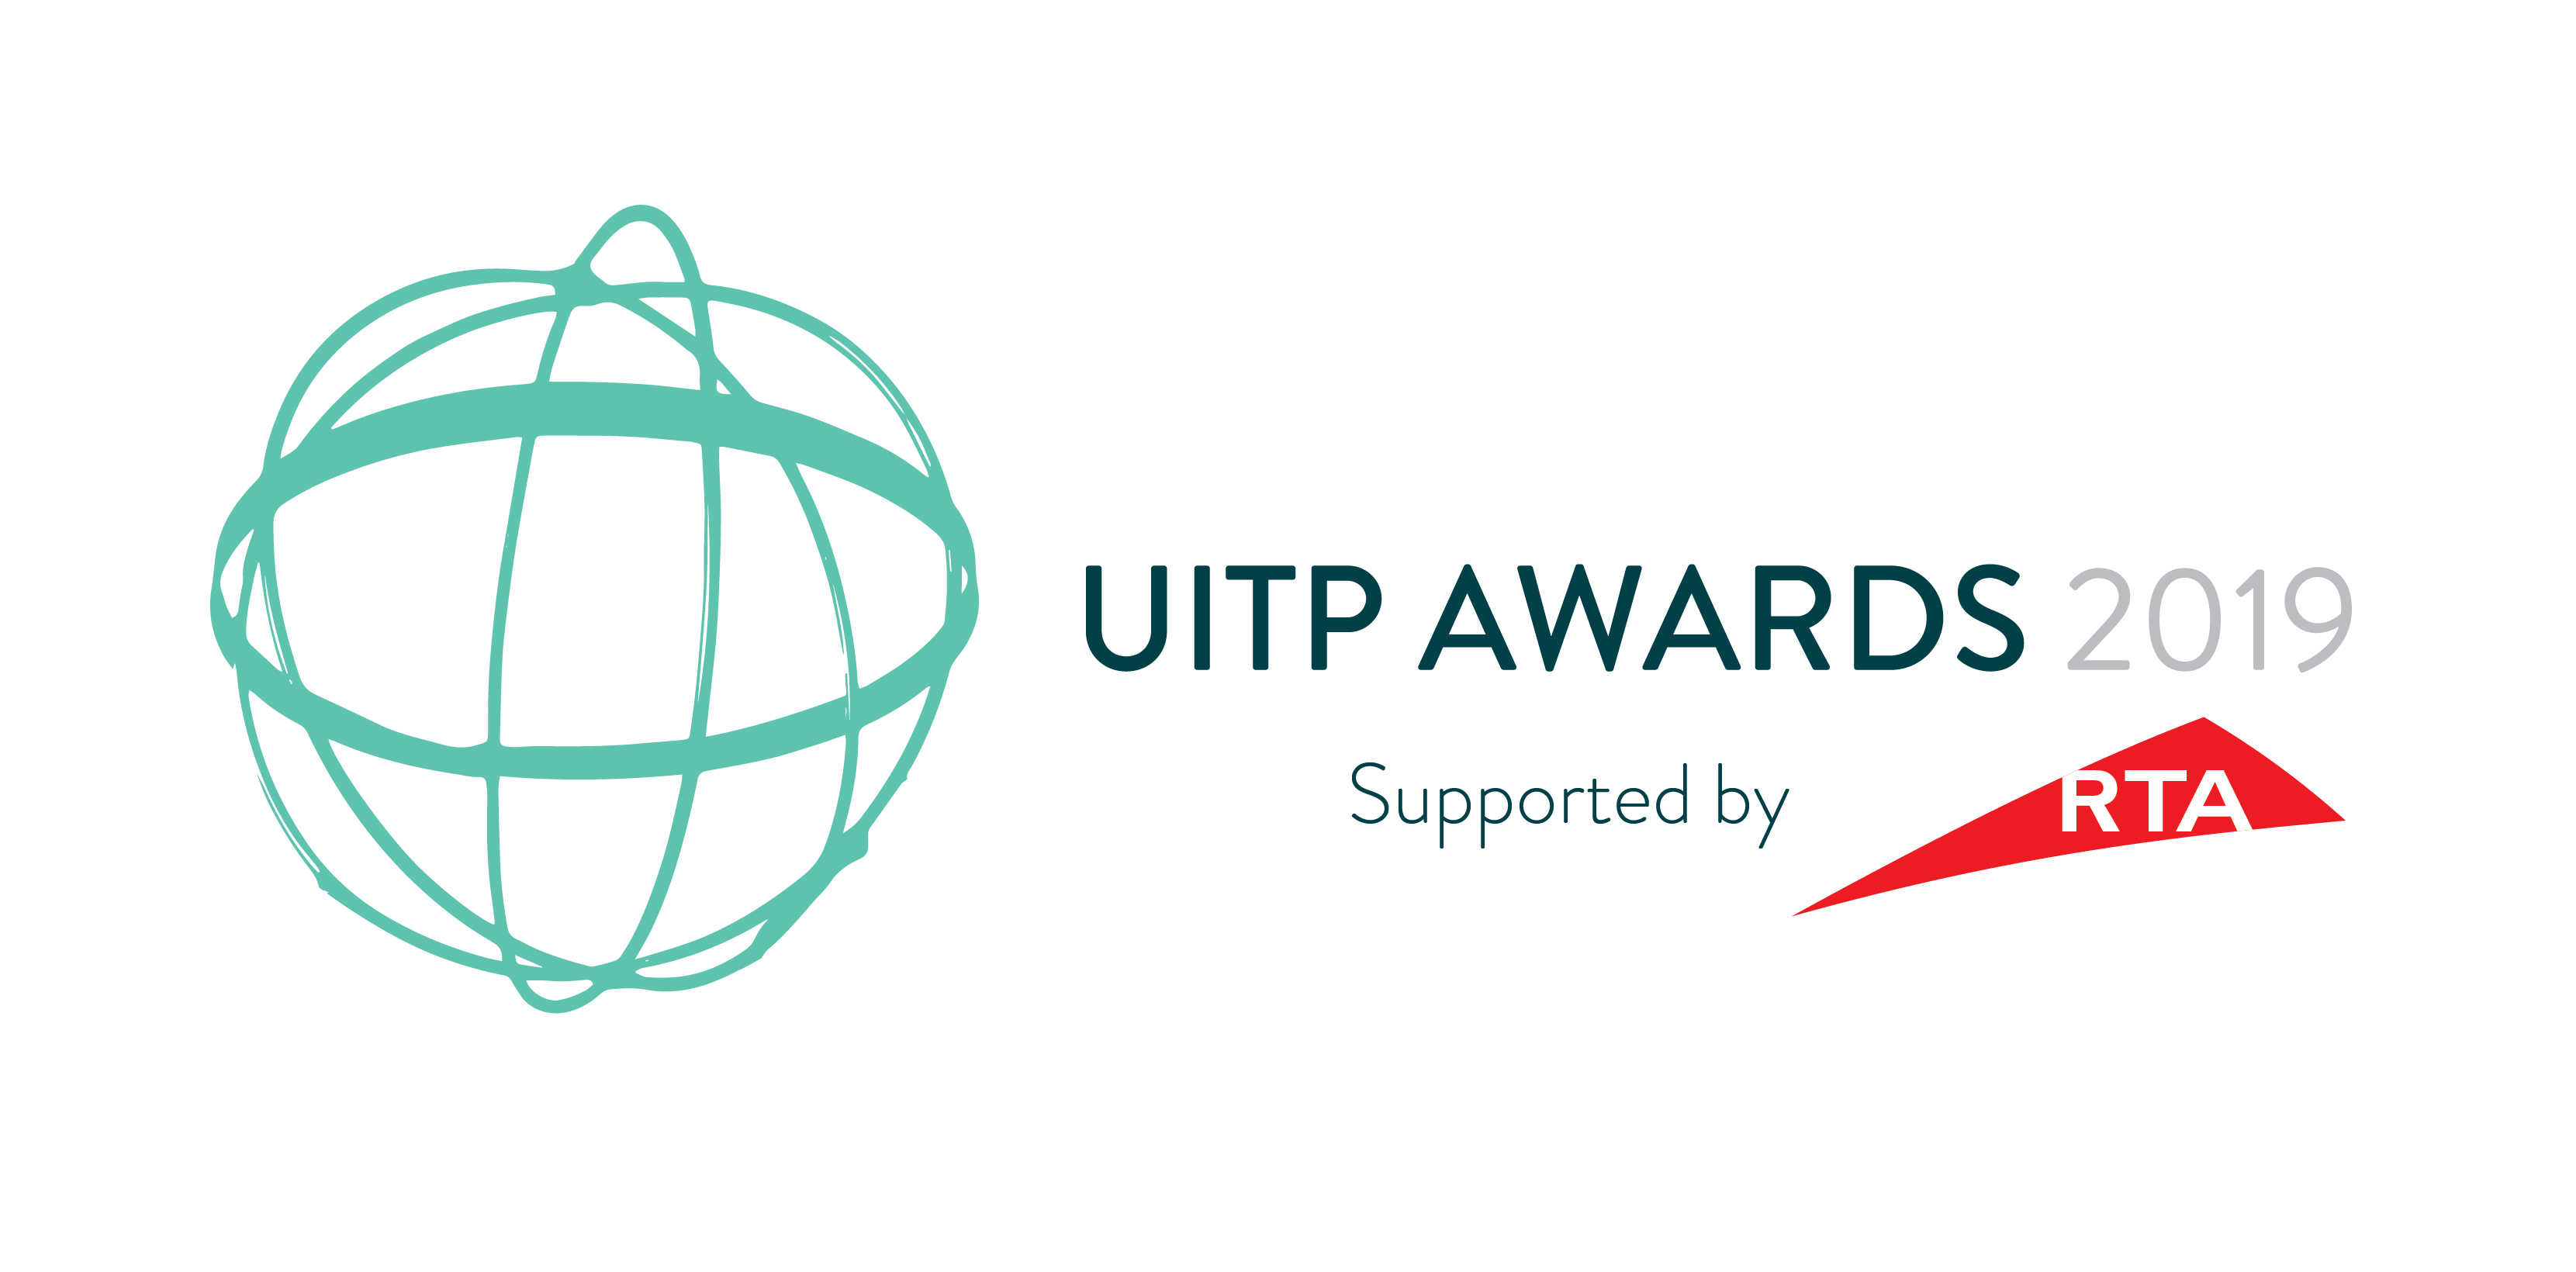 FAIRTIQ wins UITP Award and enables the easiest travel also in Turku | FAIRTIQ